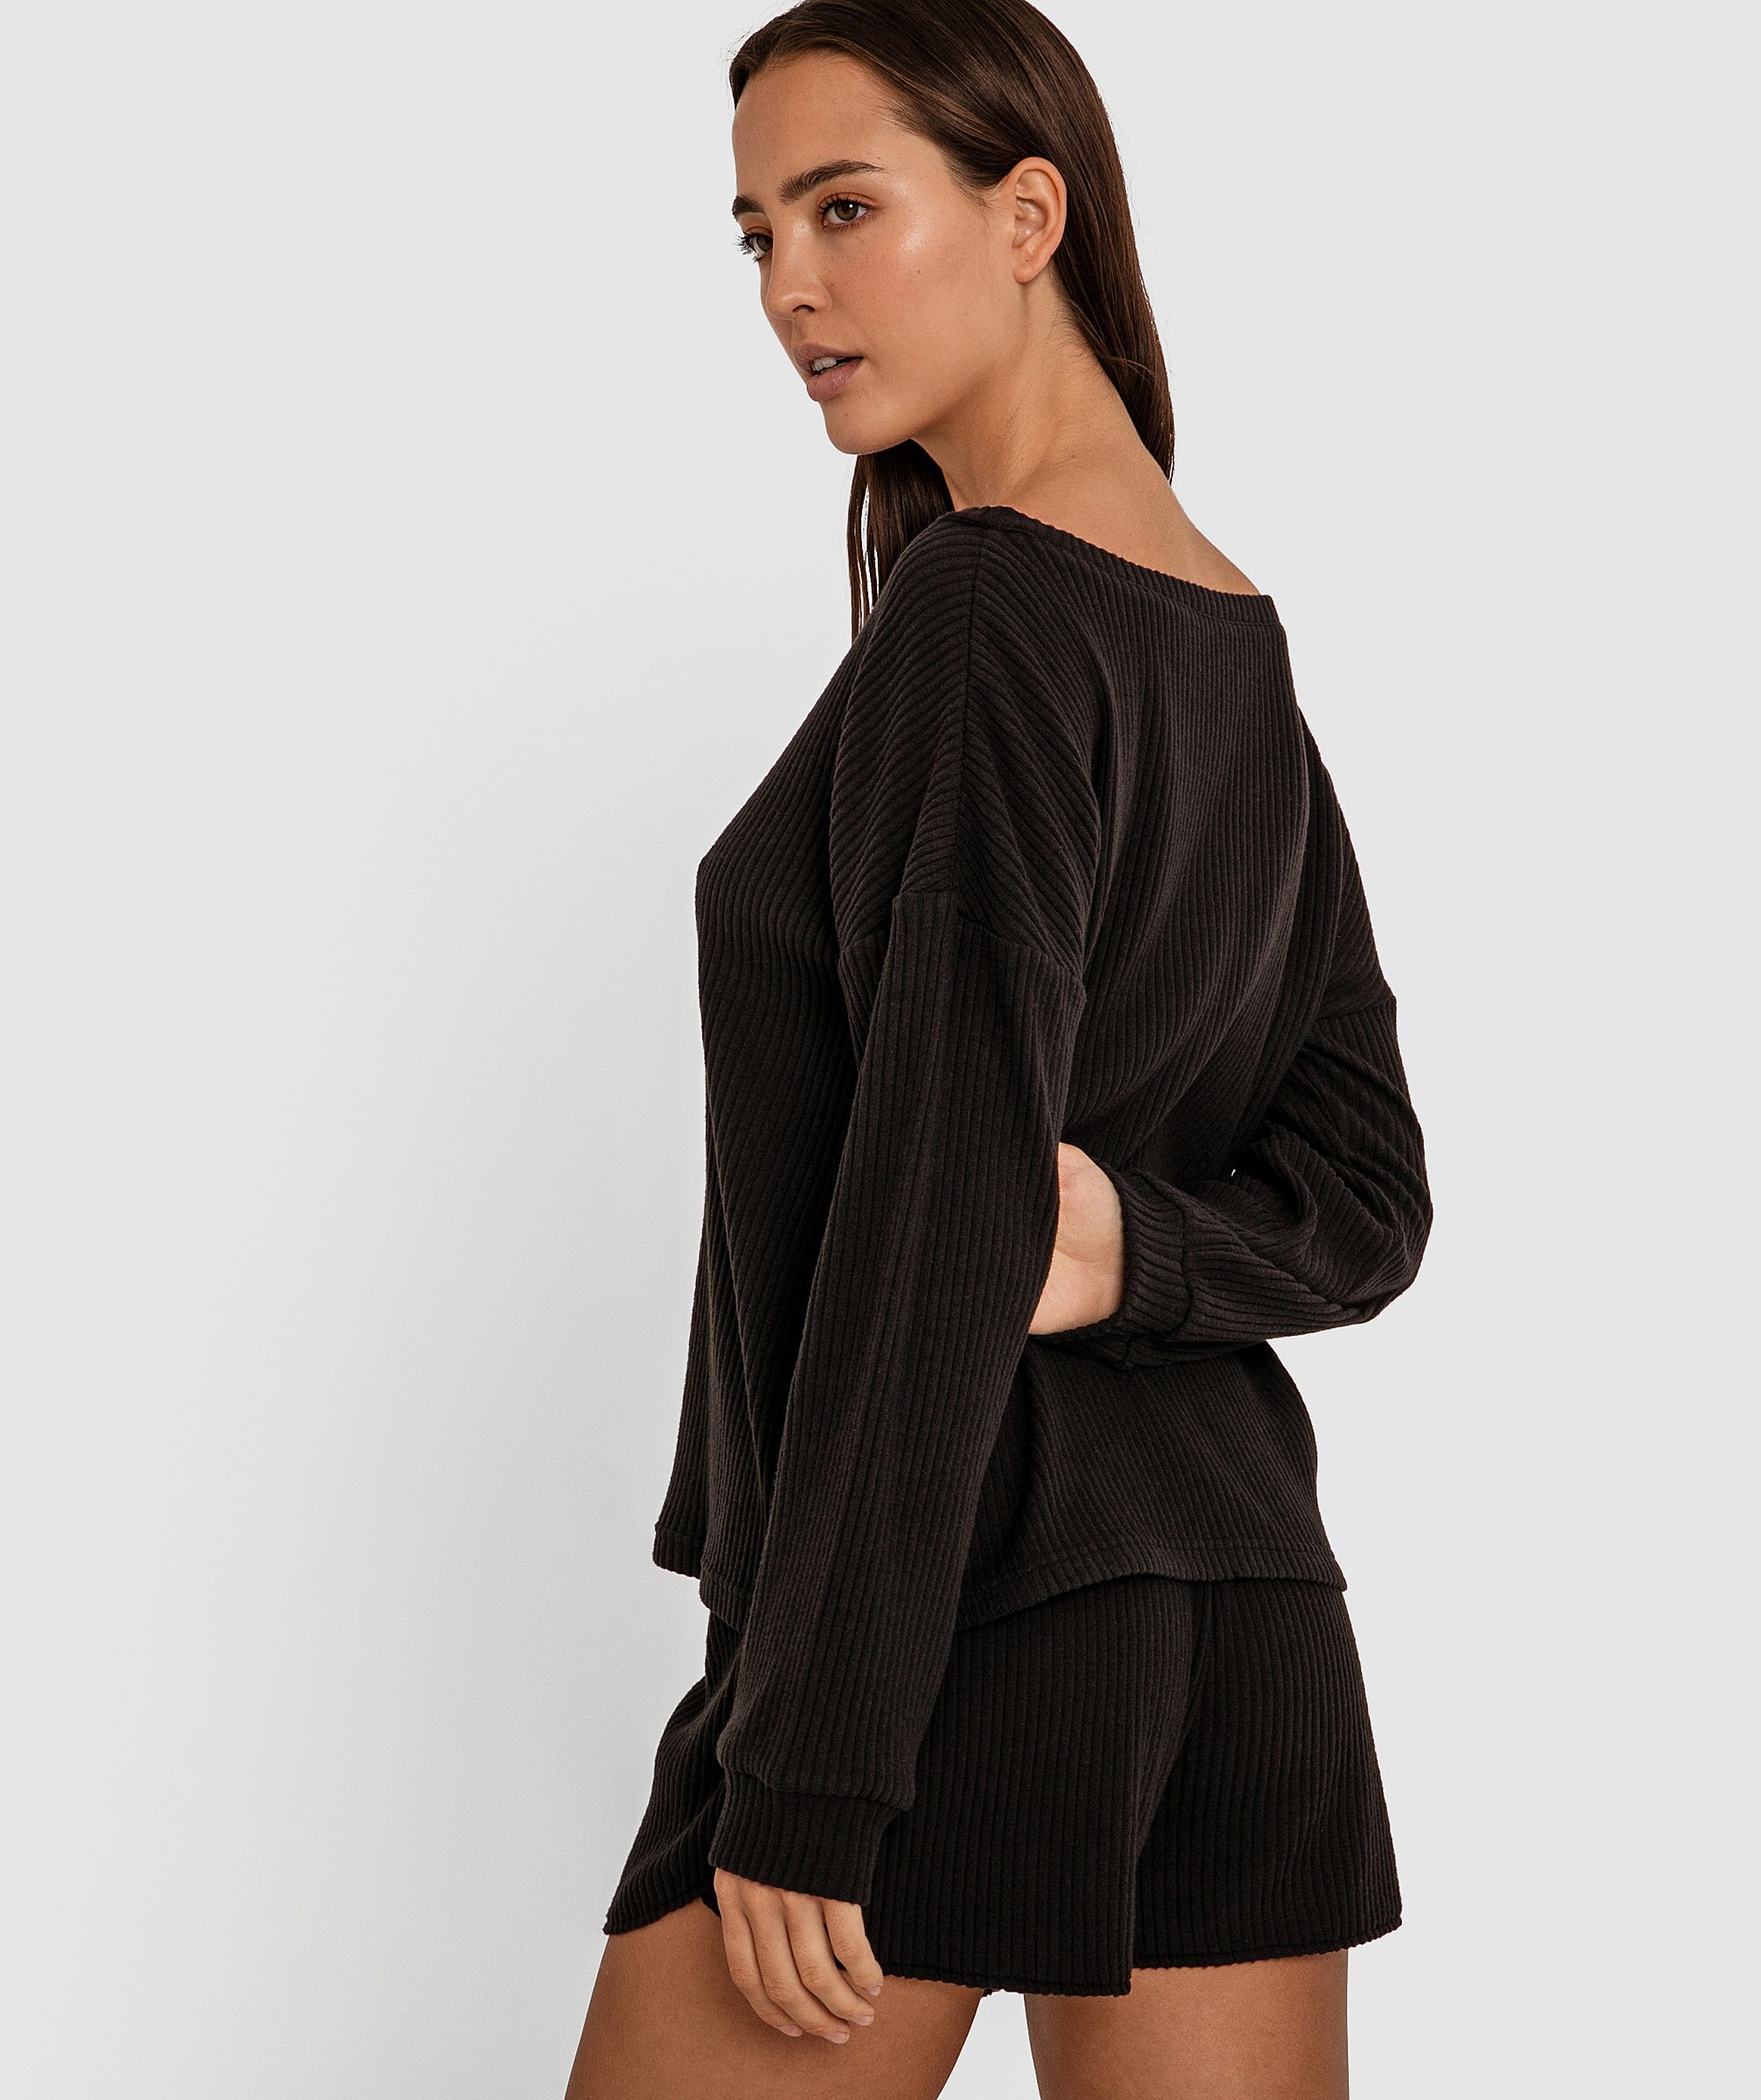 Billie Long Sleeve Shirt - Black